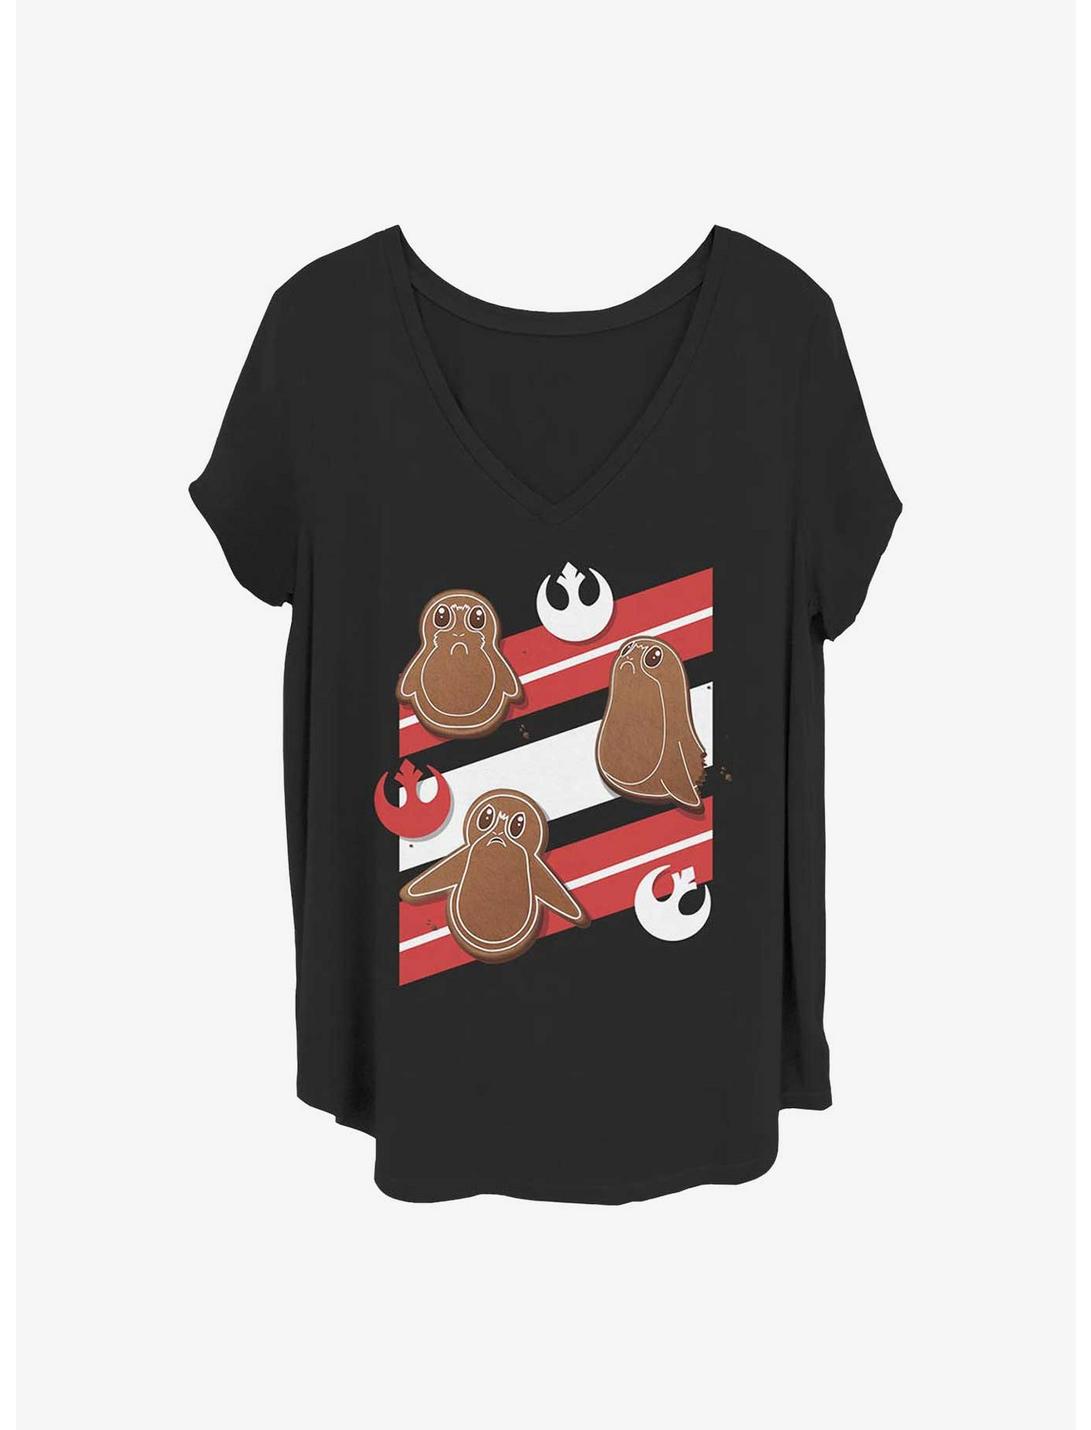 Star Wars: The Last Jedi Ginger Porgs Girls T-Shirt Plus Size, BLACK, hi-res